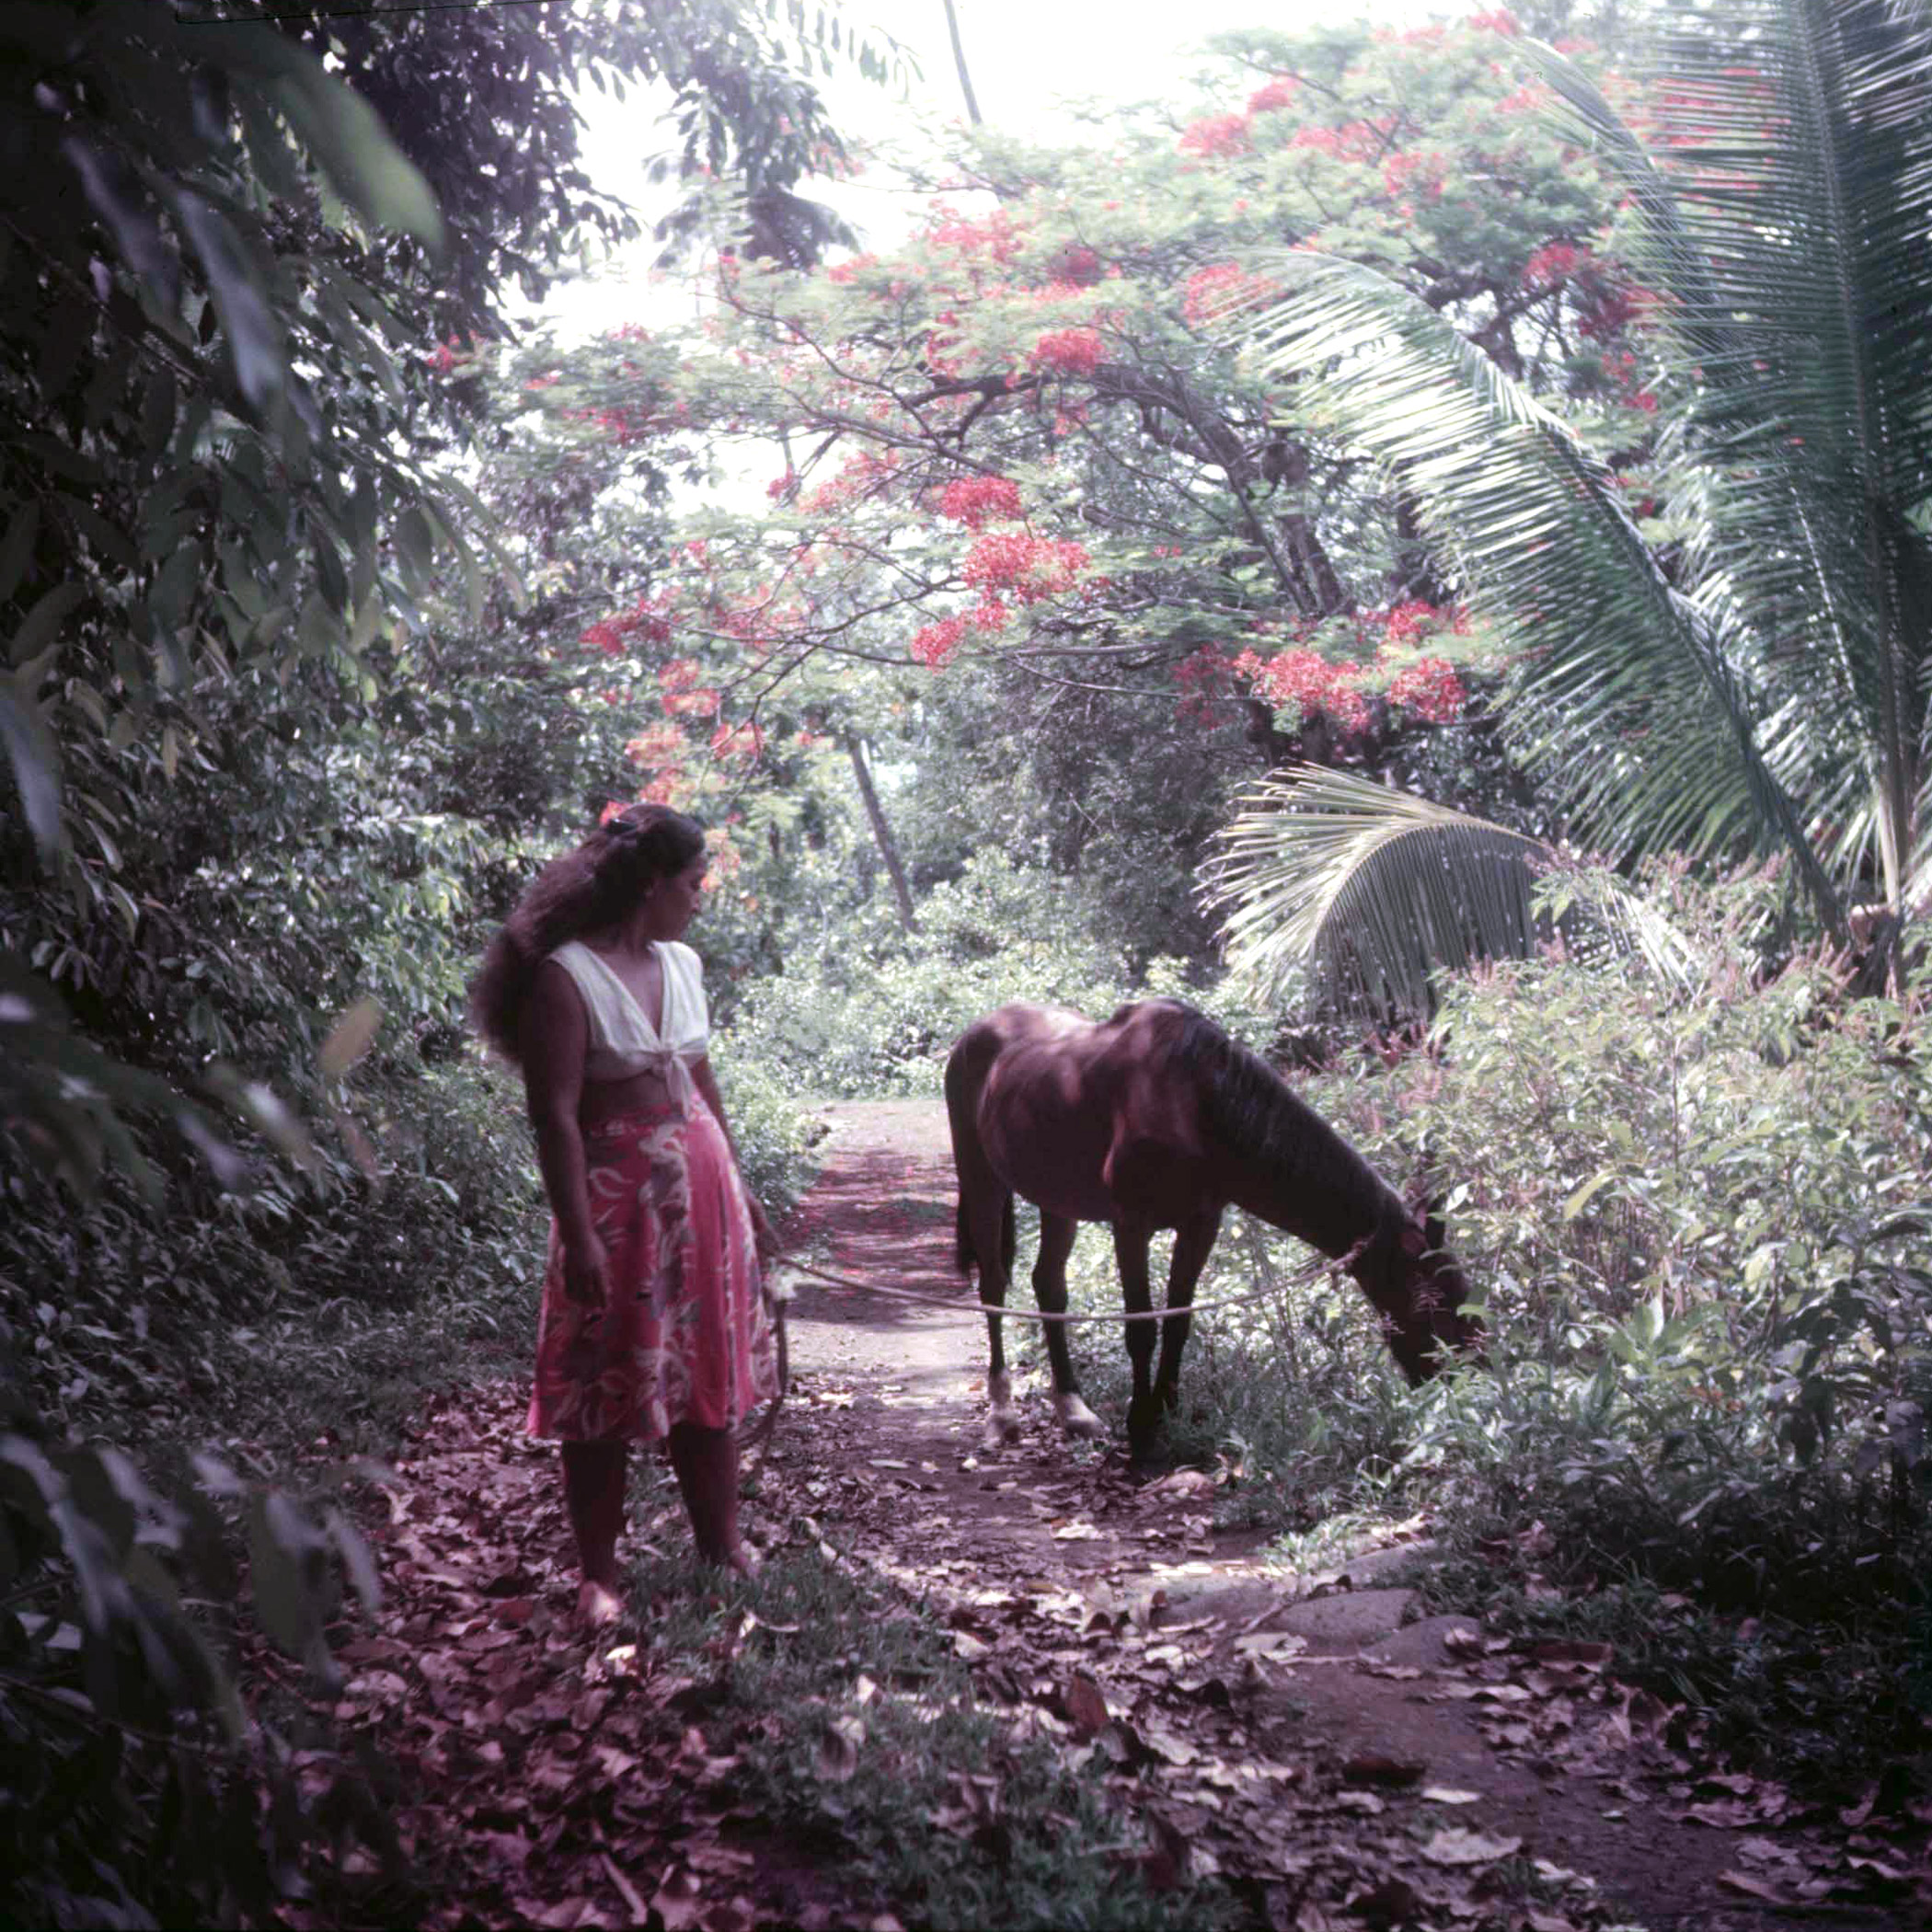 A Tahitian woman walking her horse through the jungle.